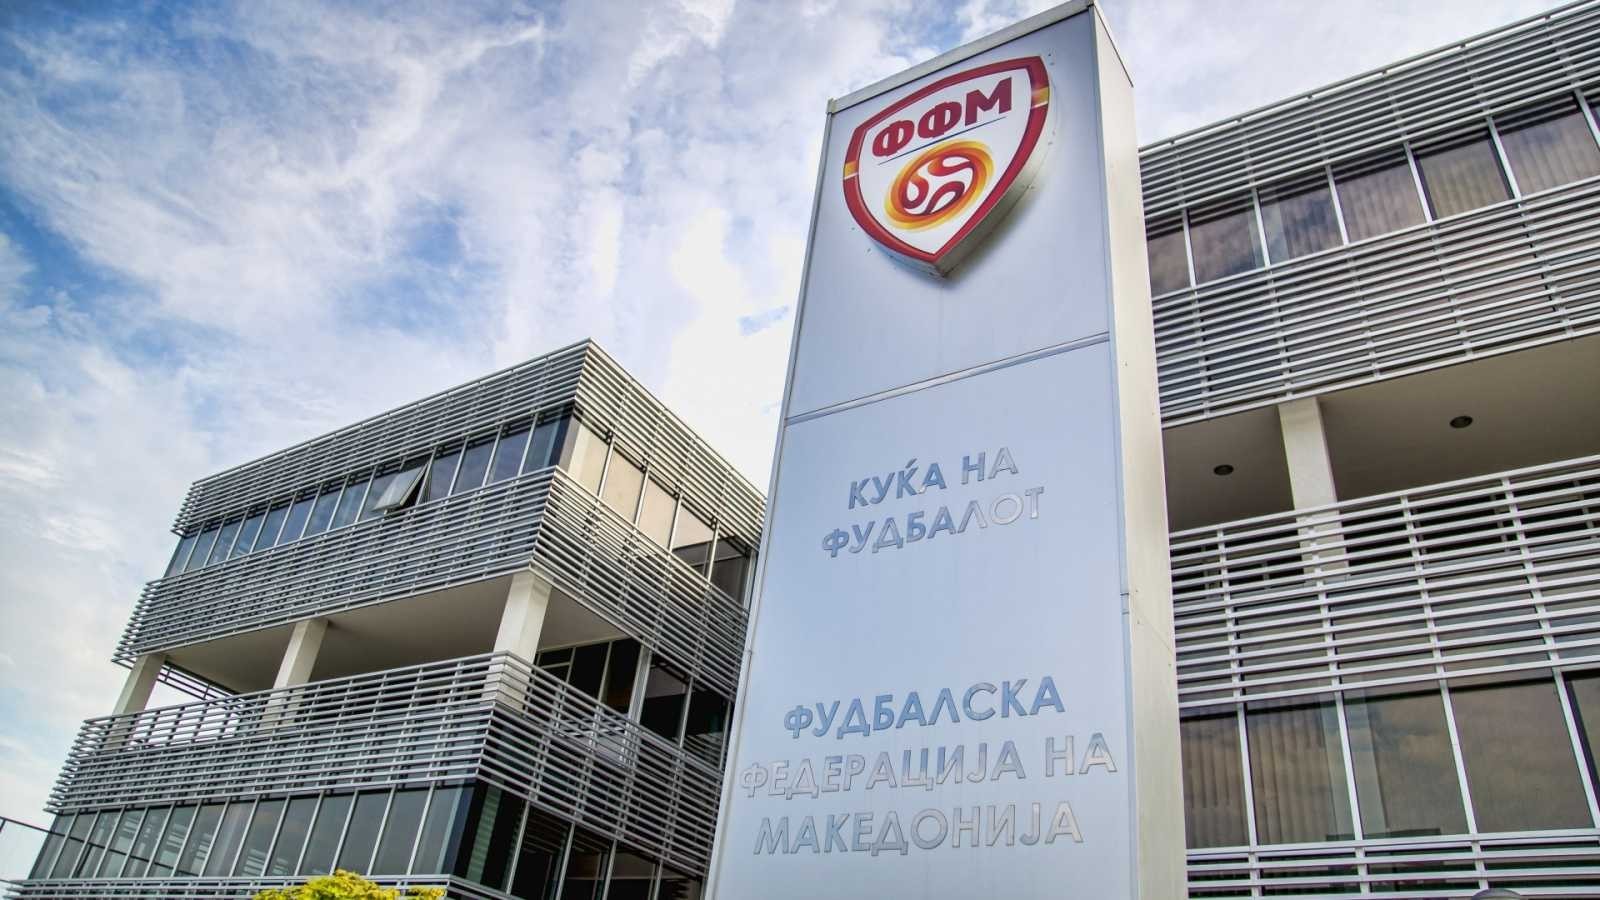 Shkaku i COVID-19, Maqedonia pezullon kampionatin e futbollit